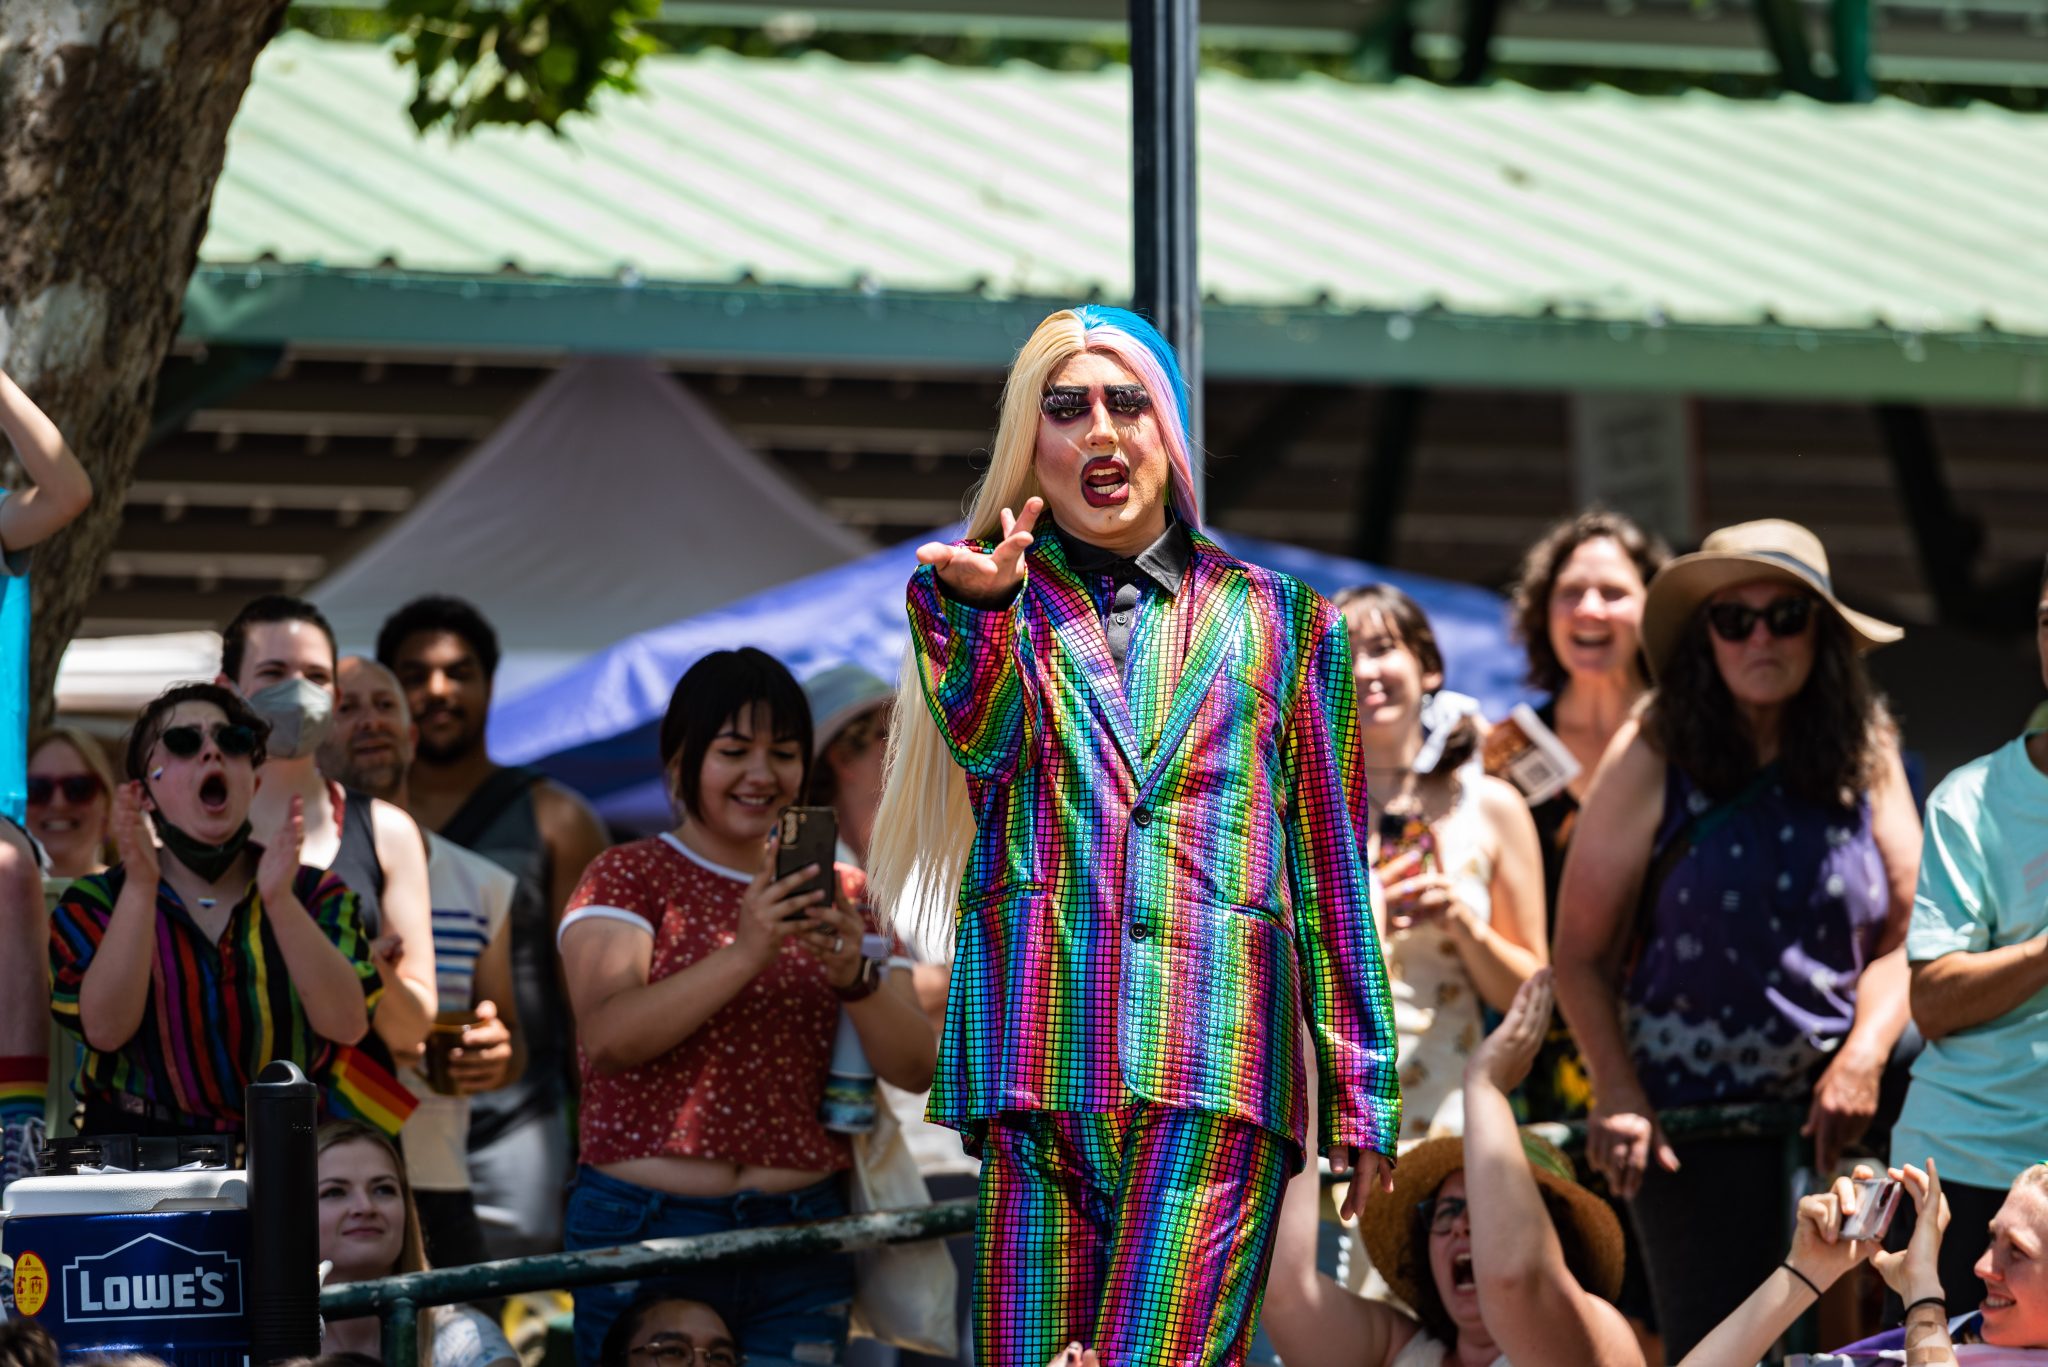 mercury rising, drag queen, rainbow sequin suit, davis pride, davis, california, pride month, gay community, event, chris allan, freelance photojournalist, news photography, lgbtq, event, colorful